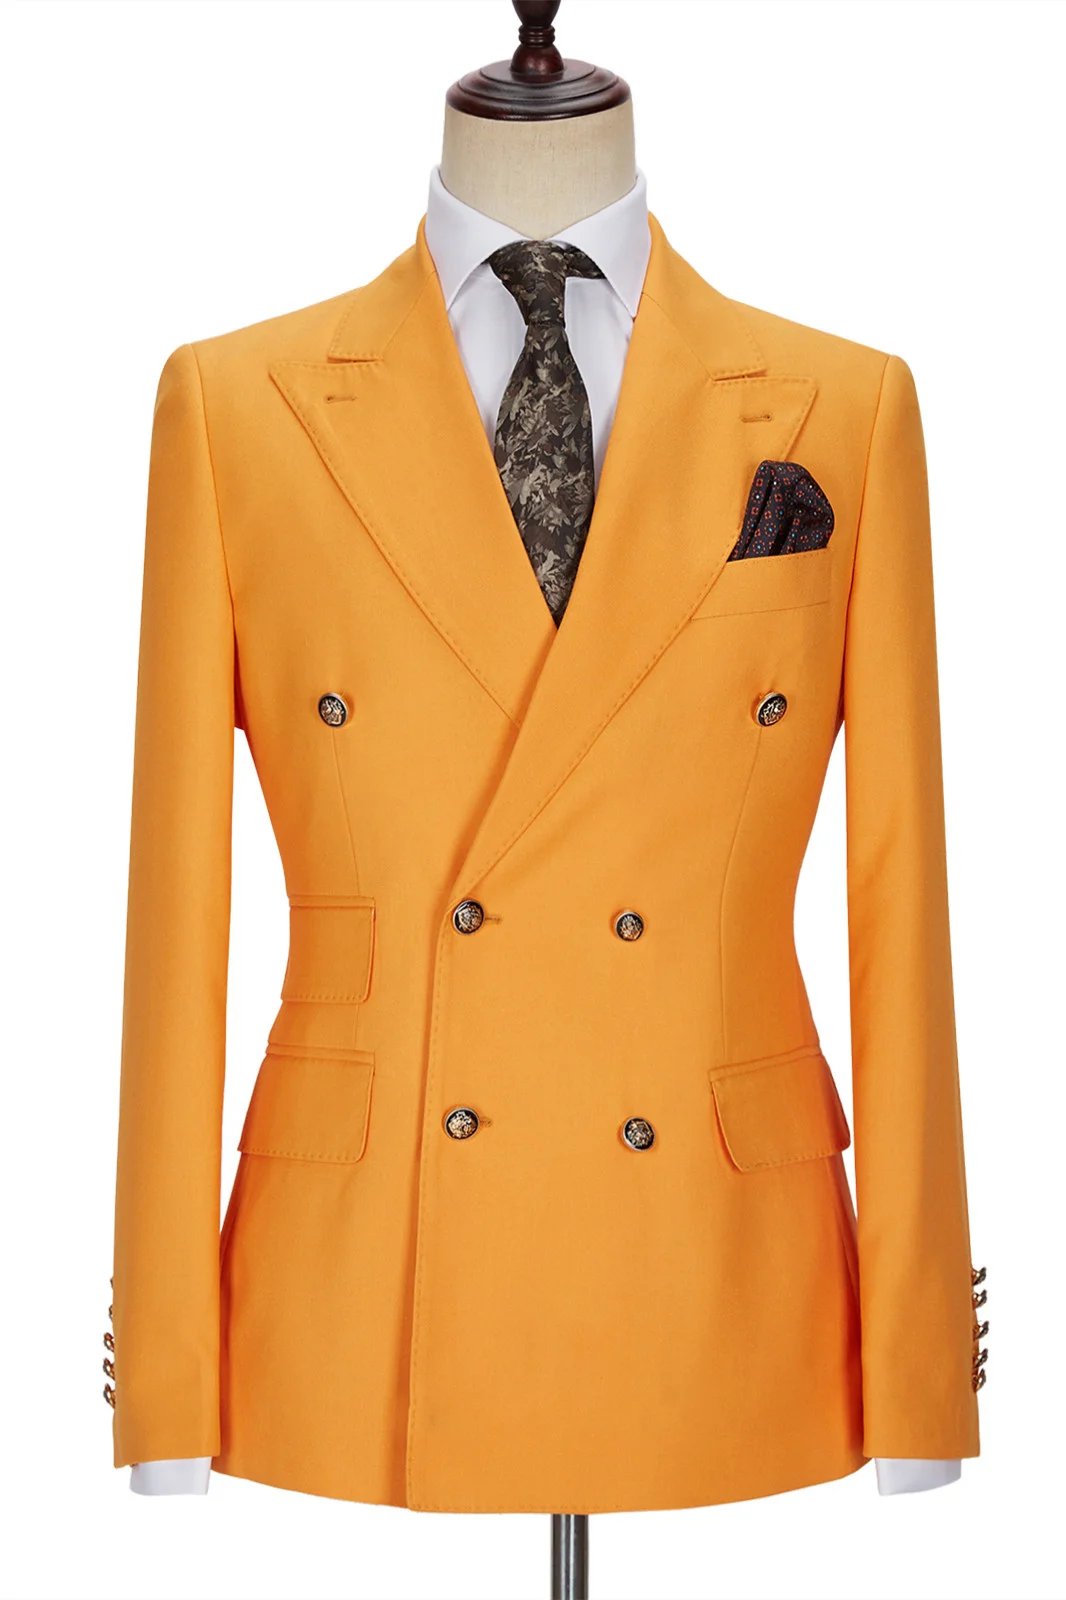 Benjamin Hot Sale Orange Double Breasted Peaked Lapel Men Suits